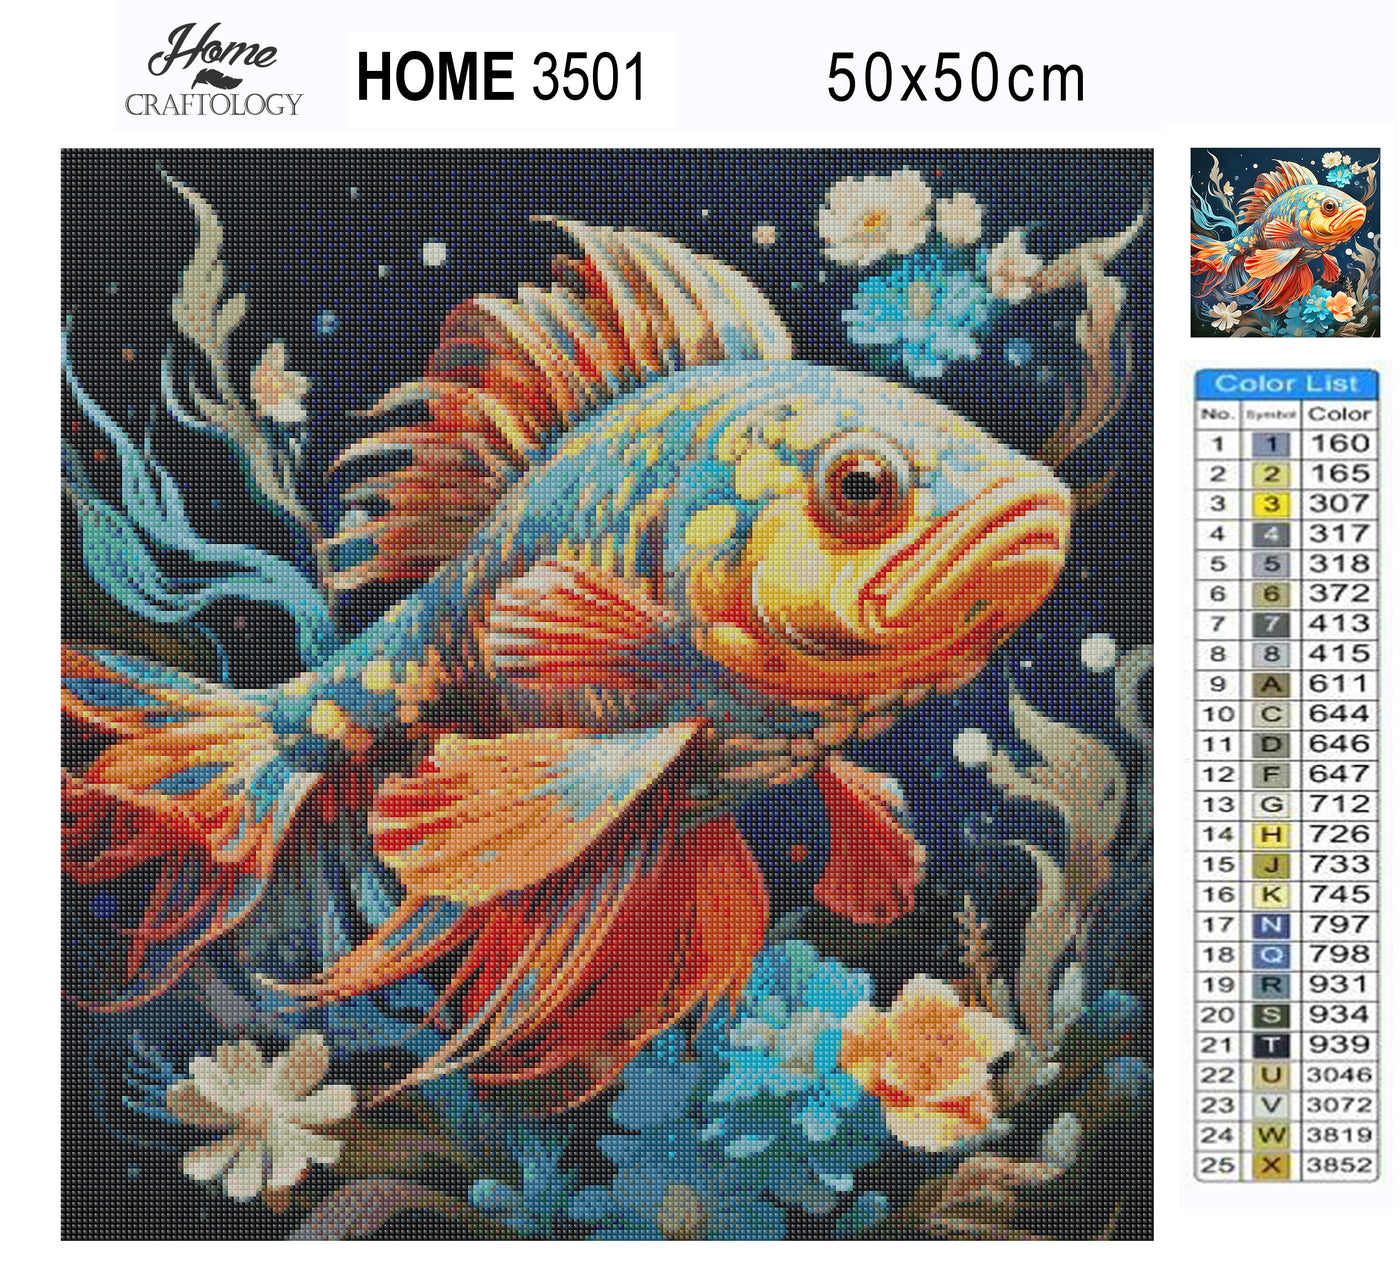 New! Fish and Flowers - Premium Diamond Painting Kit